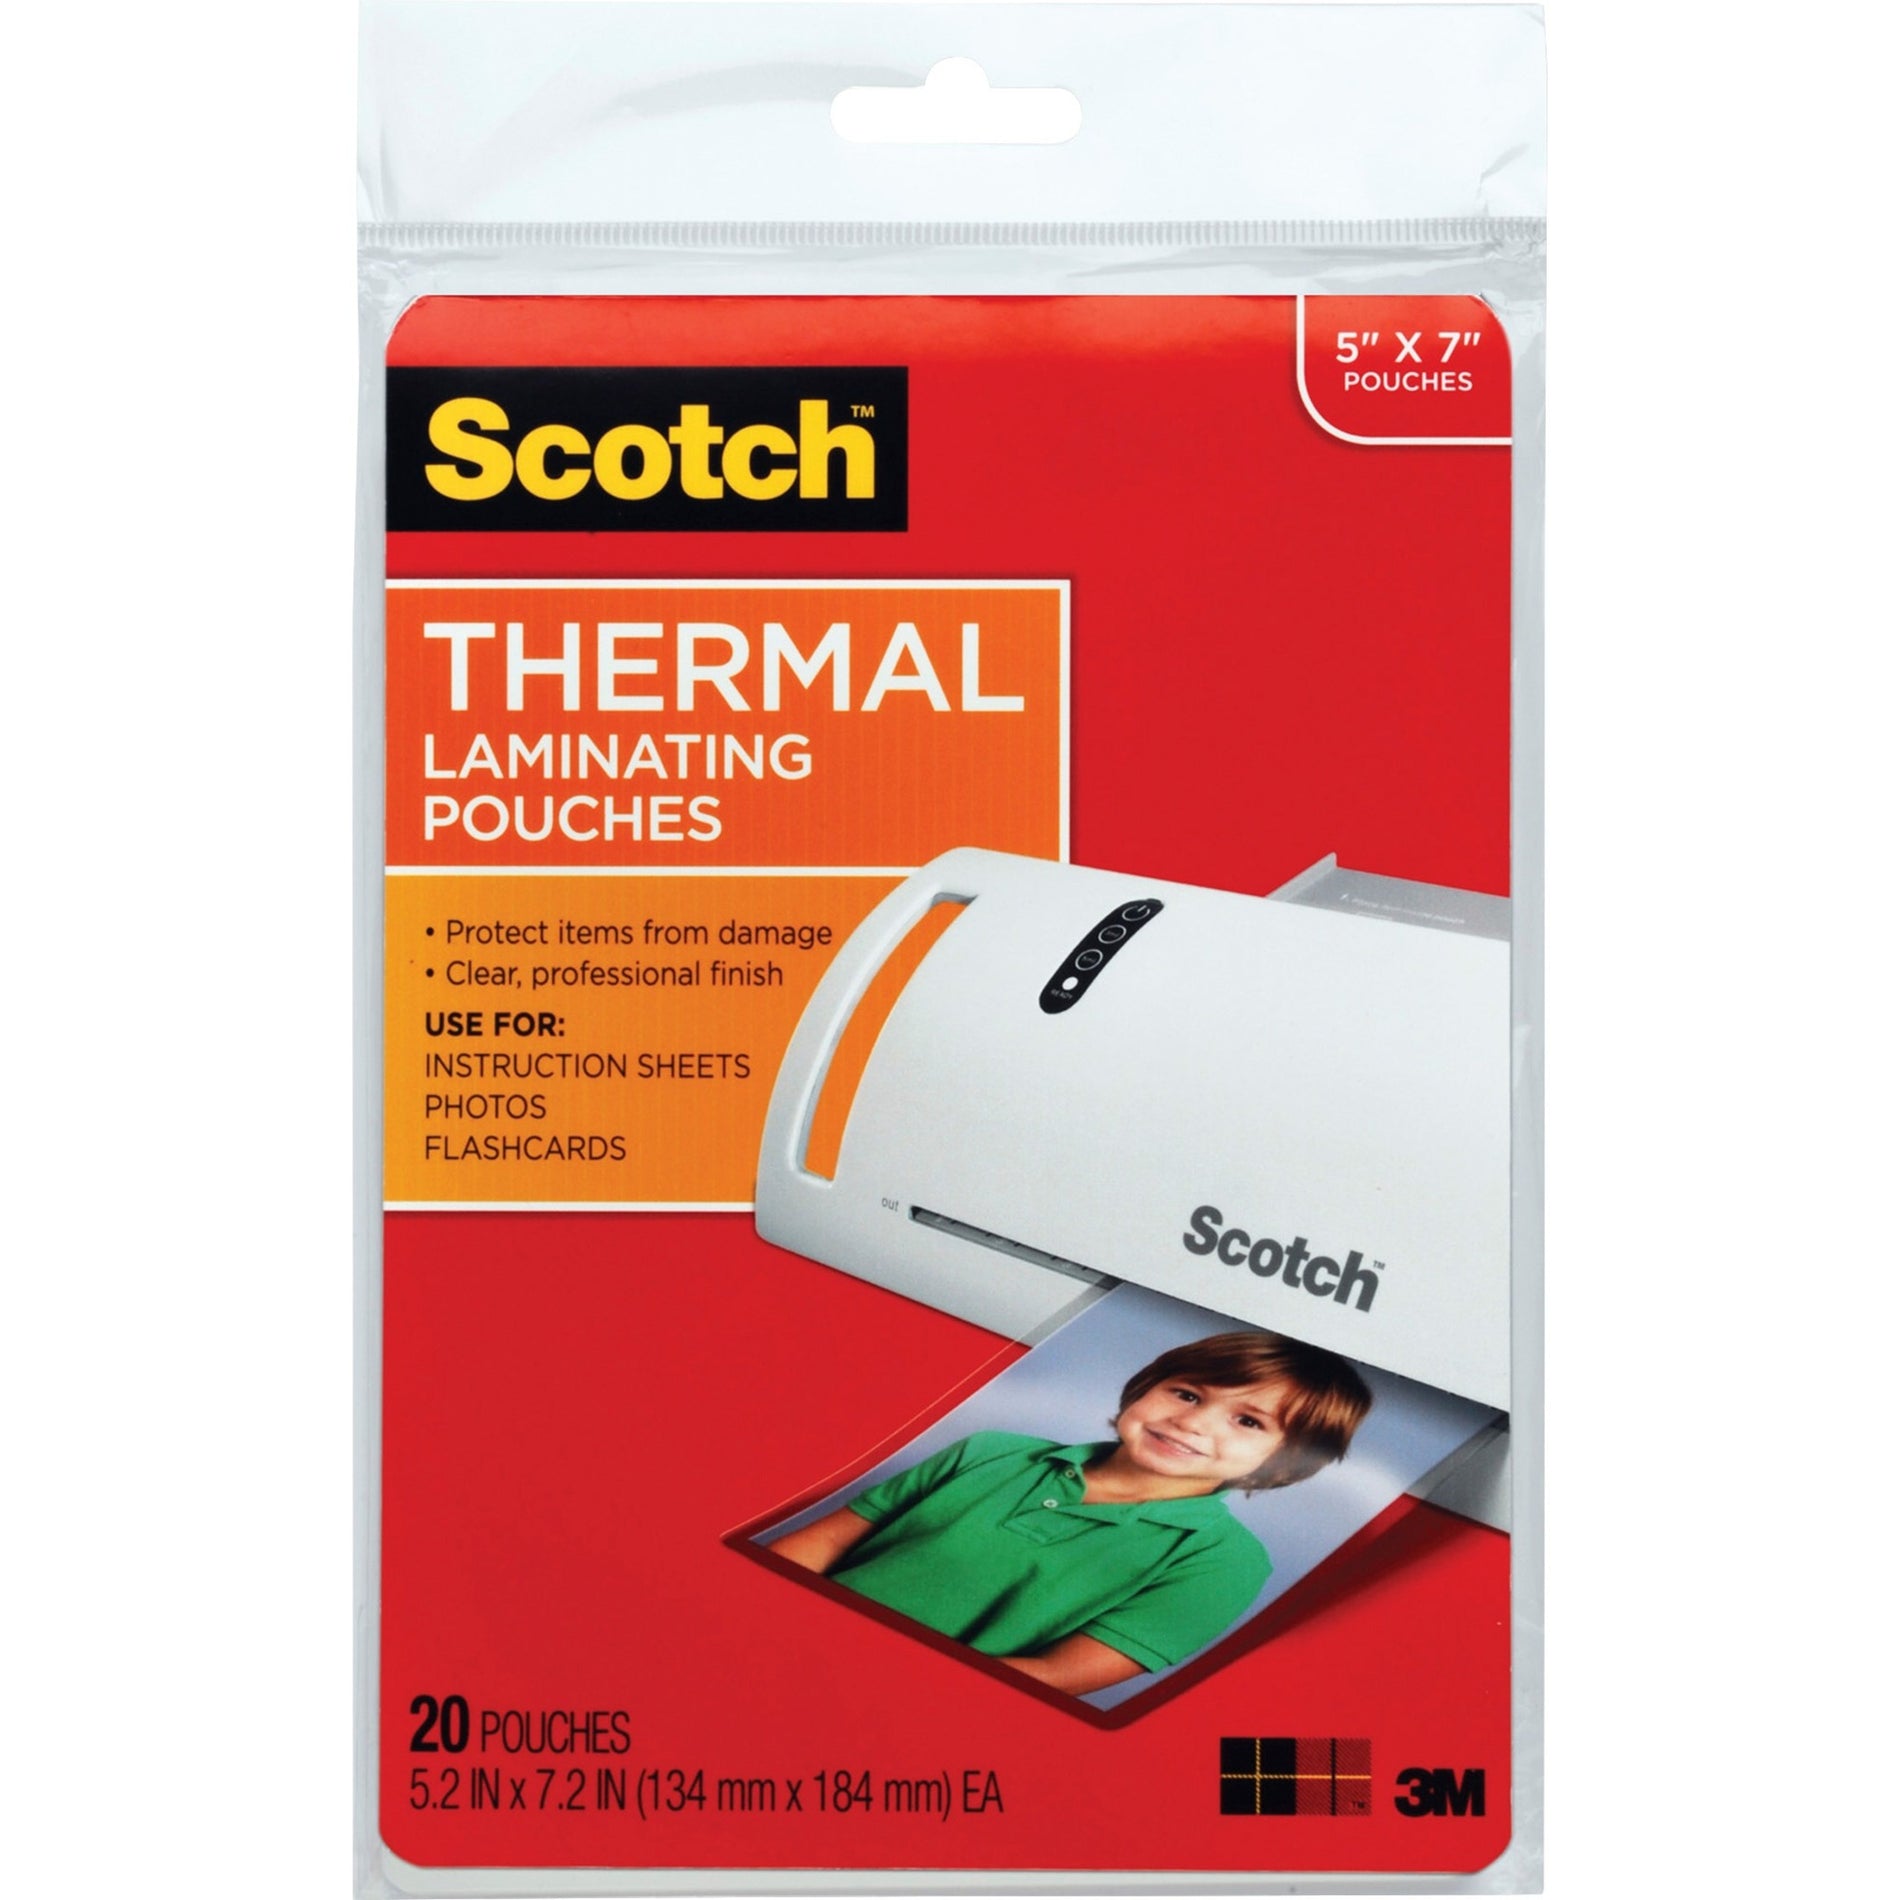 Scotch TP590320 Thermal Laminating Pouches, Photo, 5"x7", 20/PK